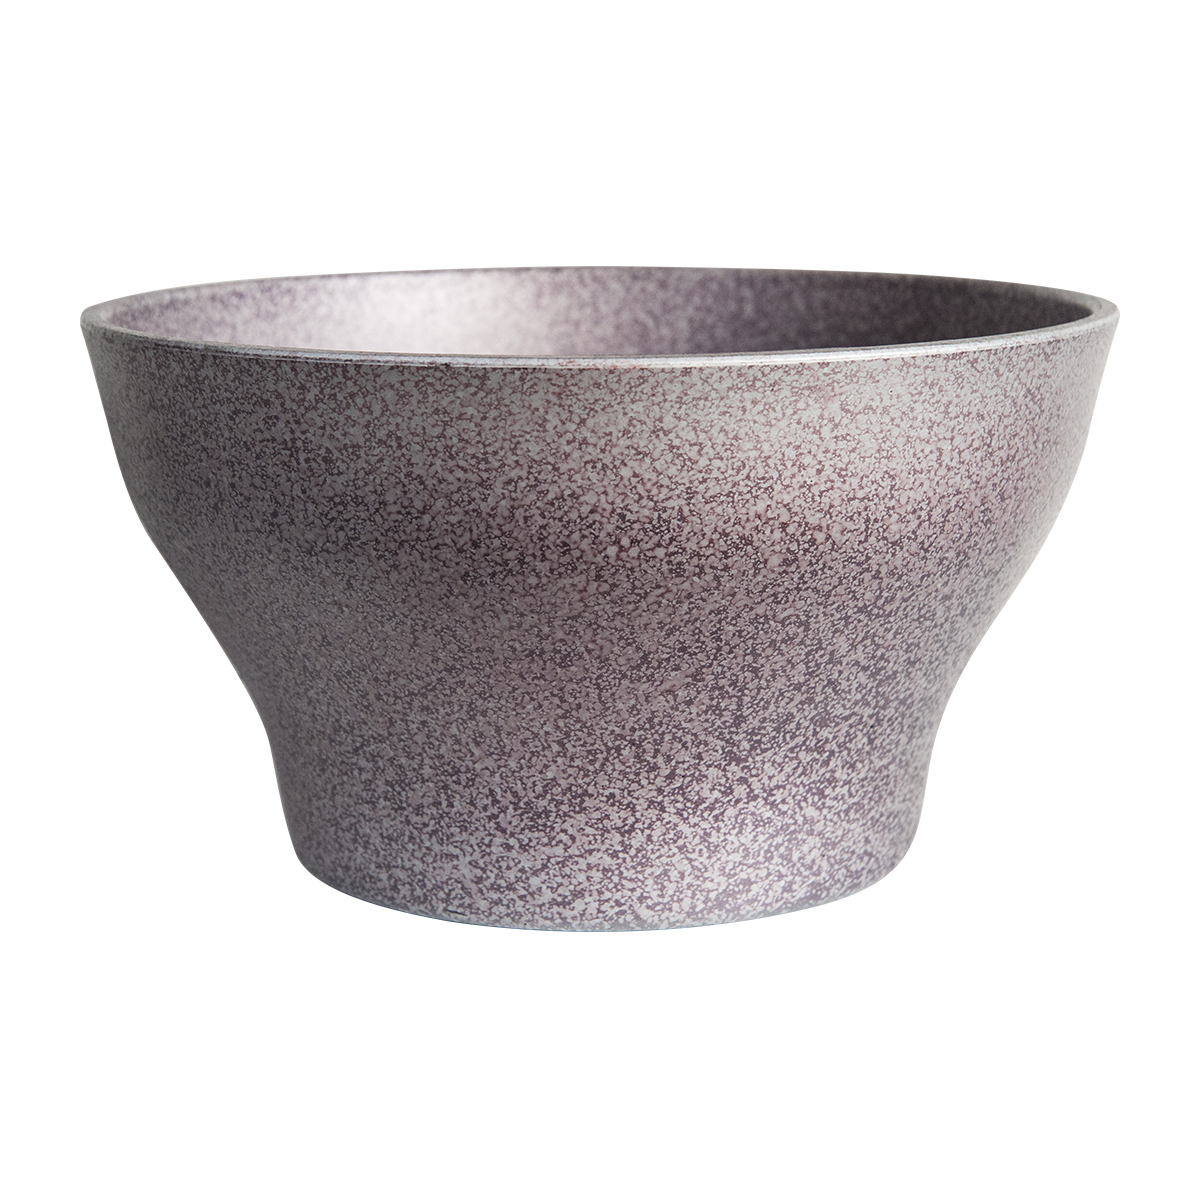 Indoor Speckle Effect Bowl Plastic Plant Pot